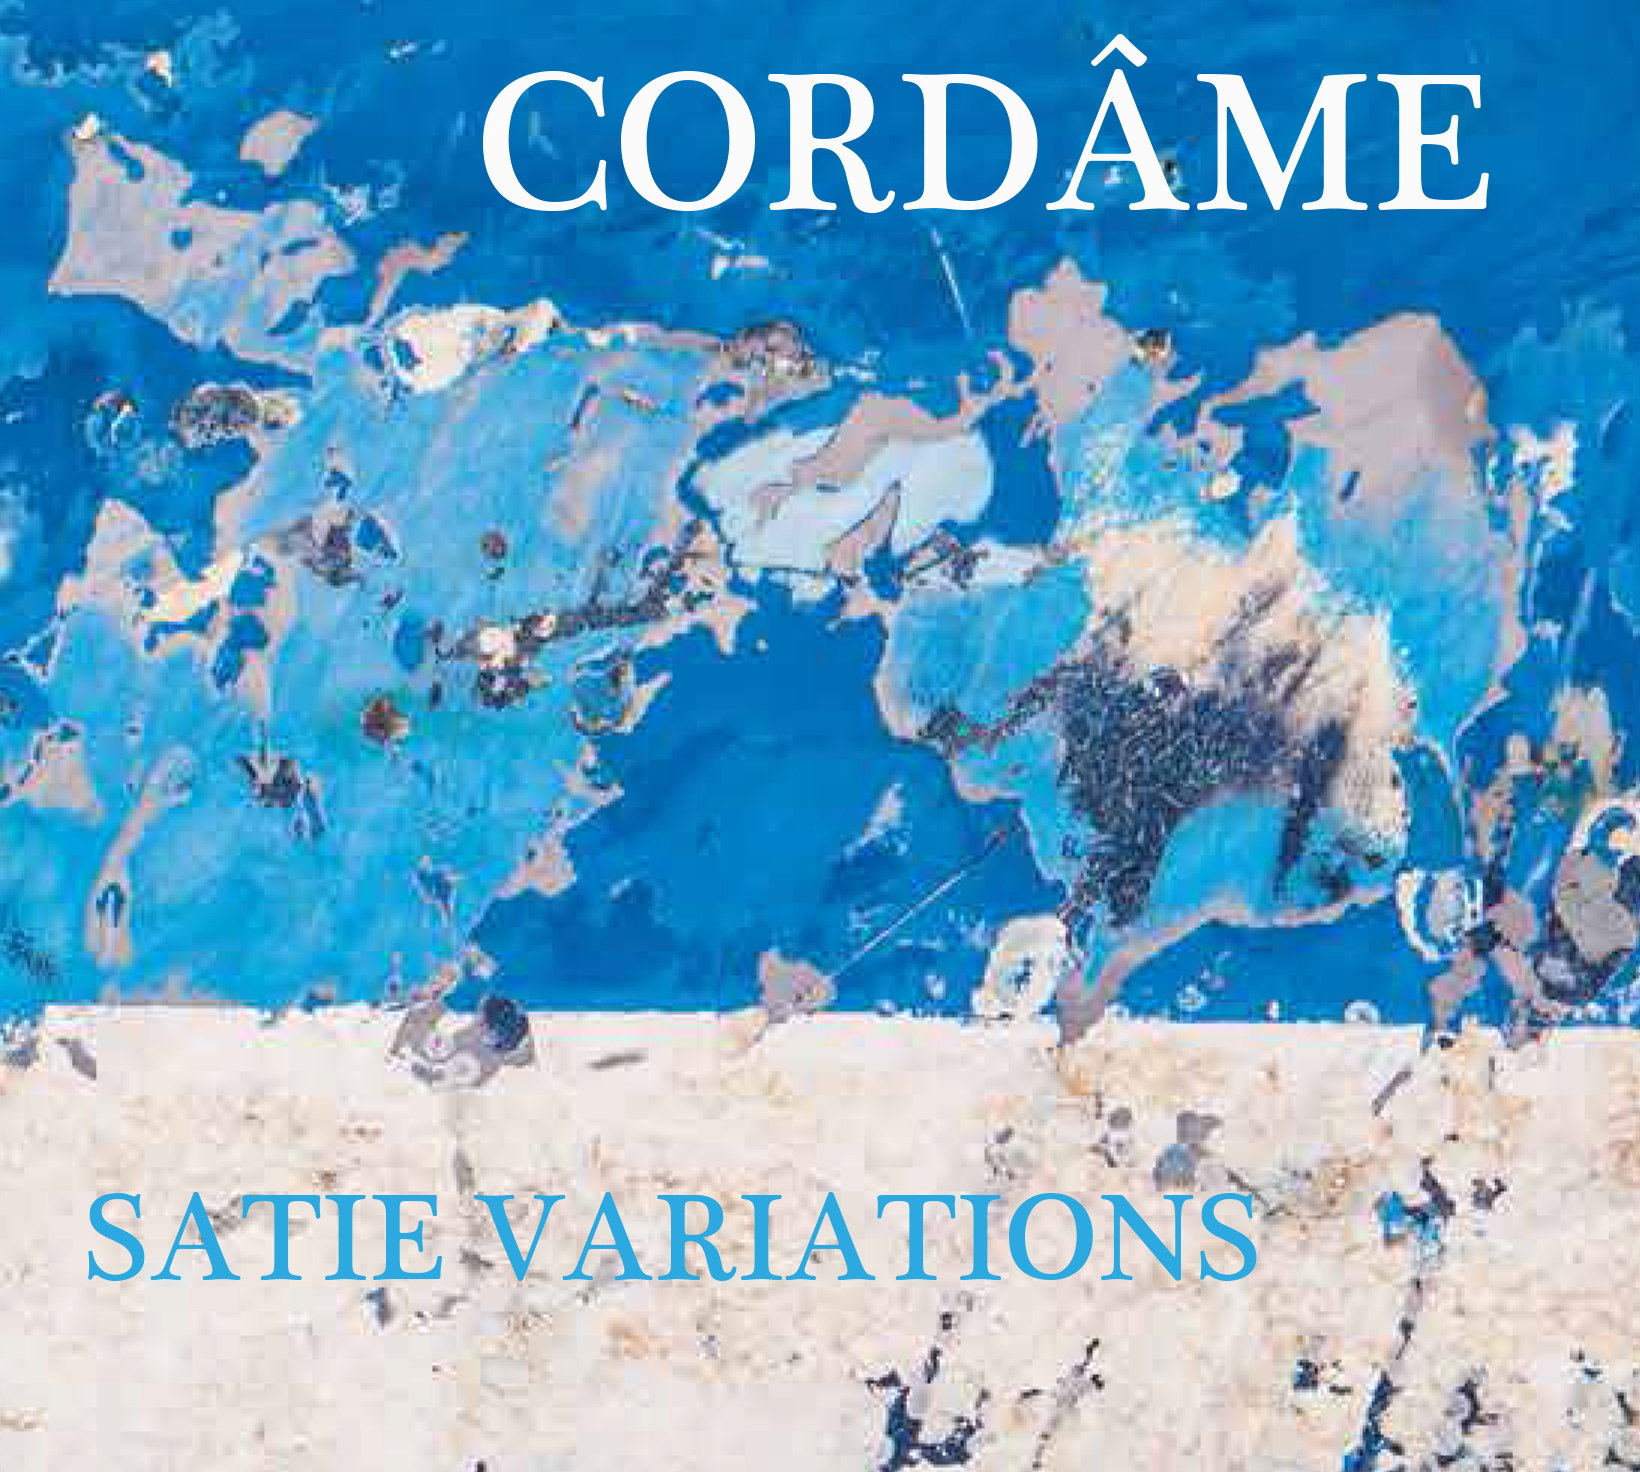 Cordâme: Satie Variations